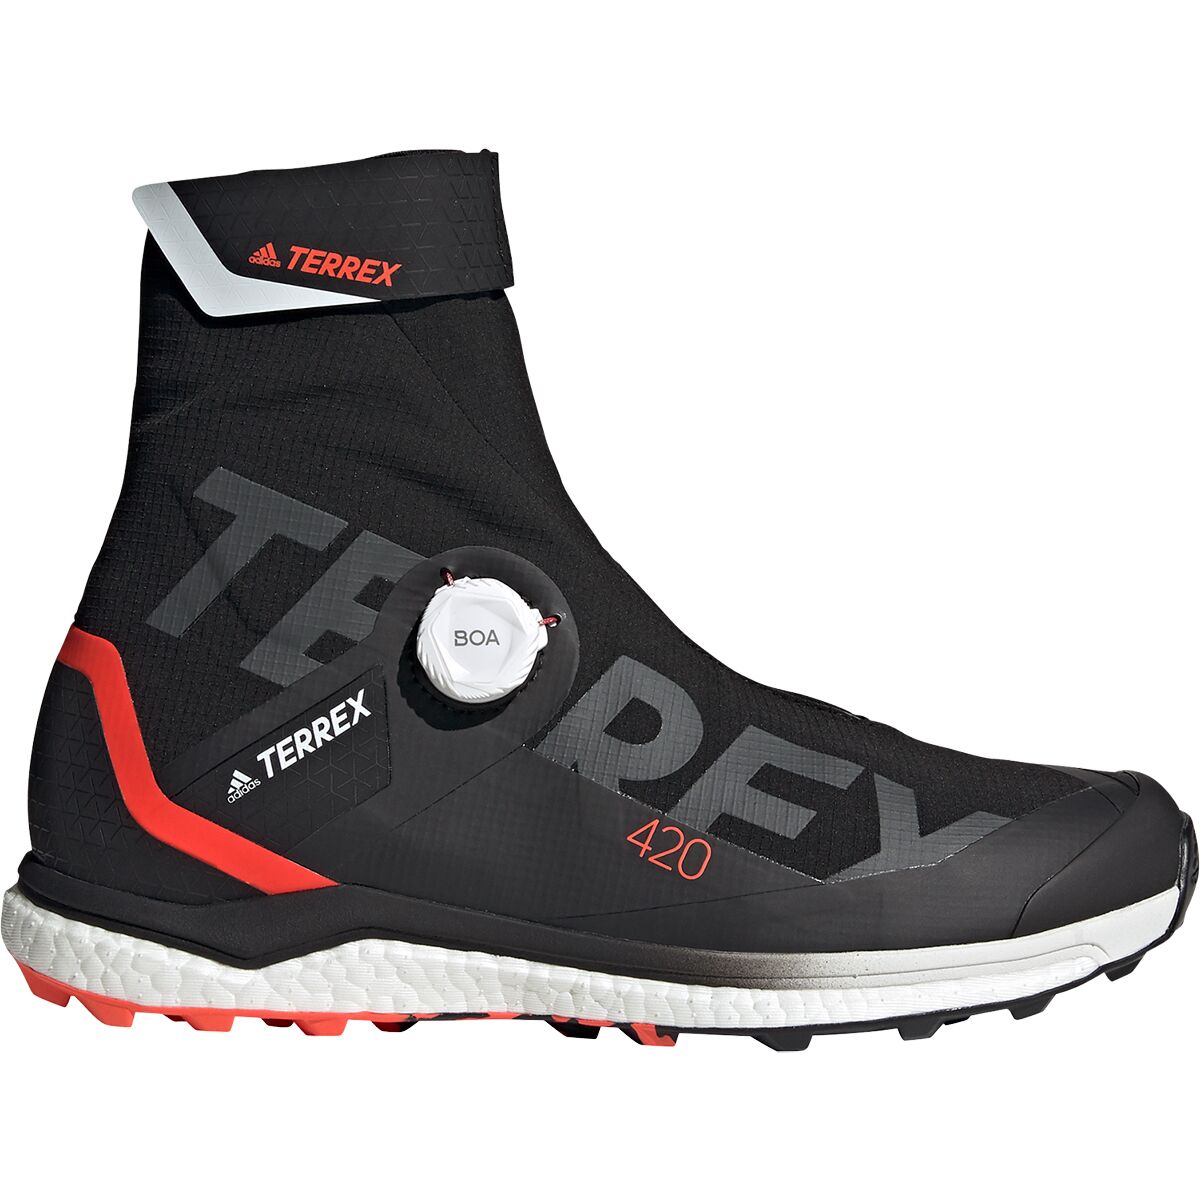 Adidas Outdoor Terrex Agravic Tech Pro Trail Running Shoe - Men's